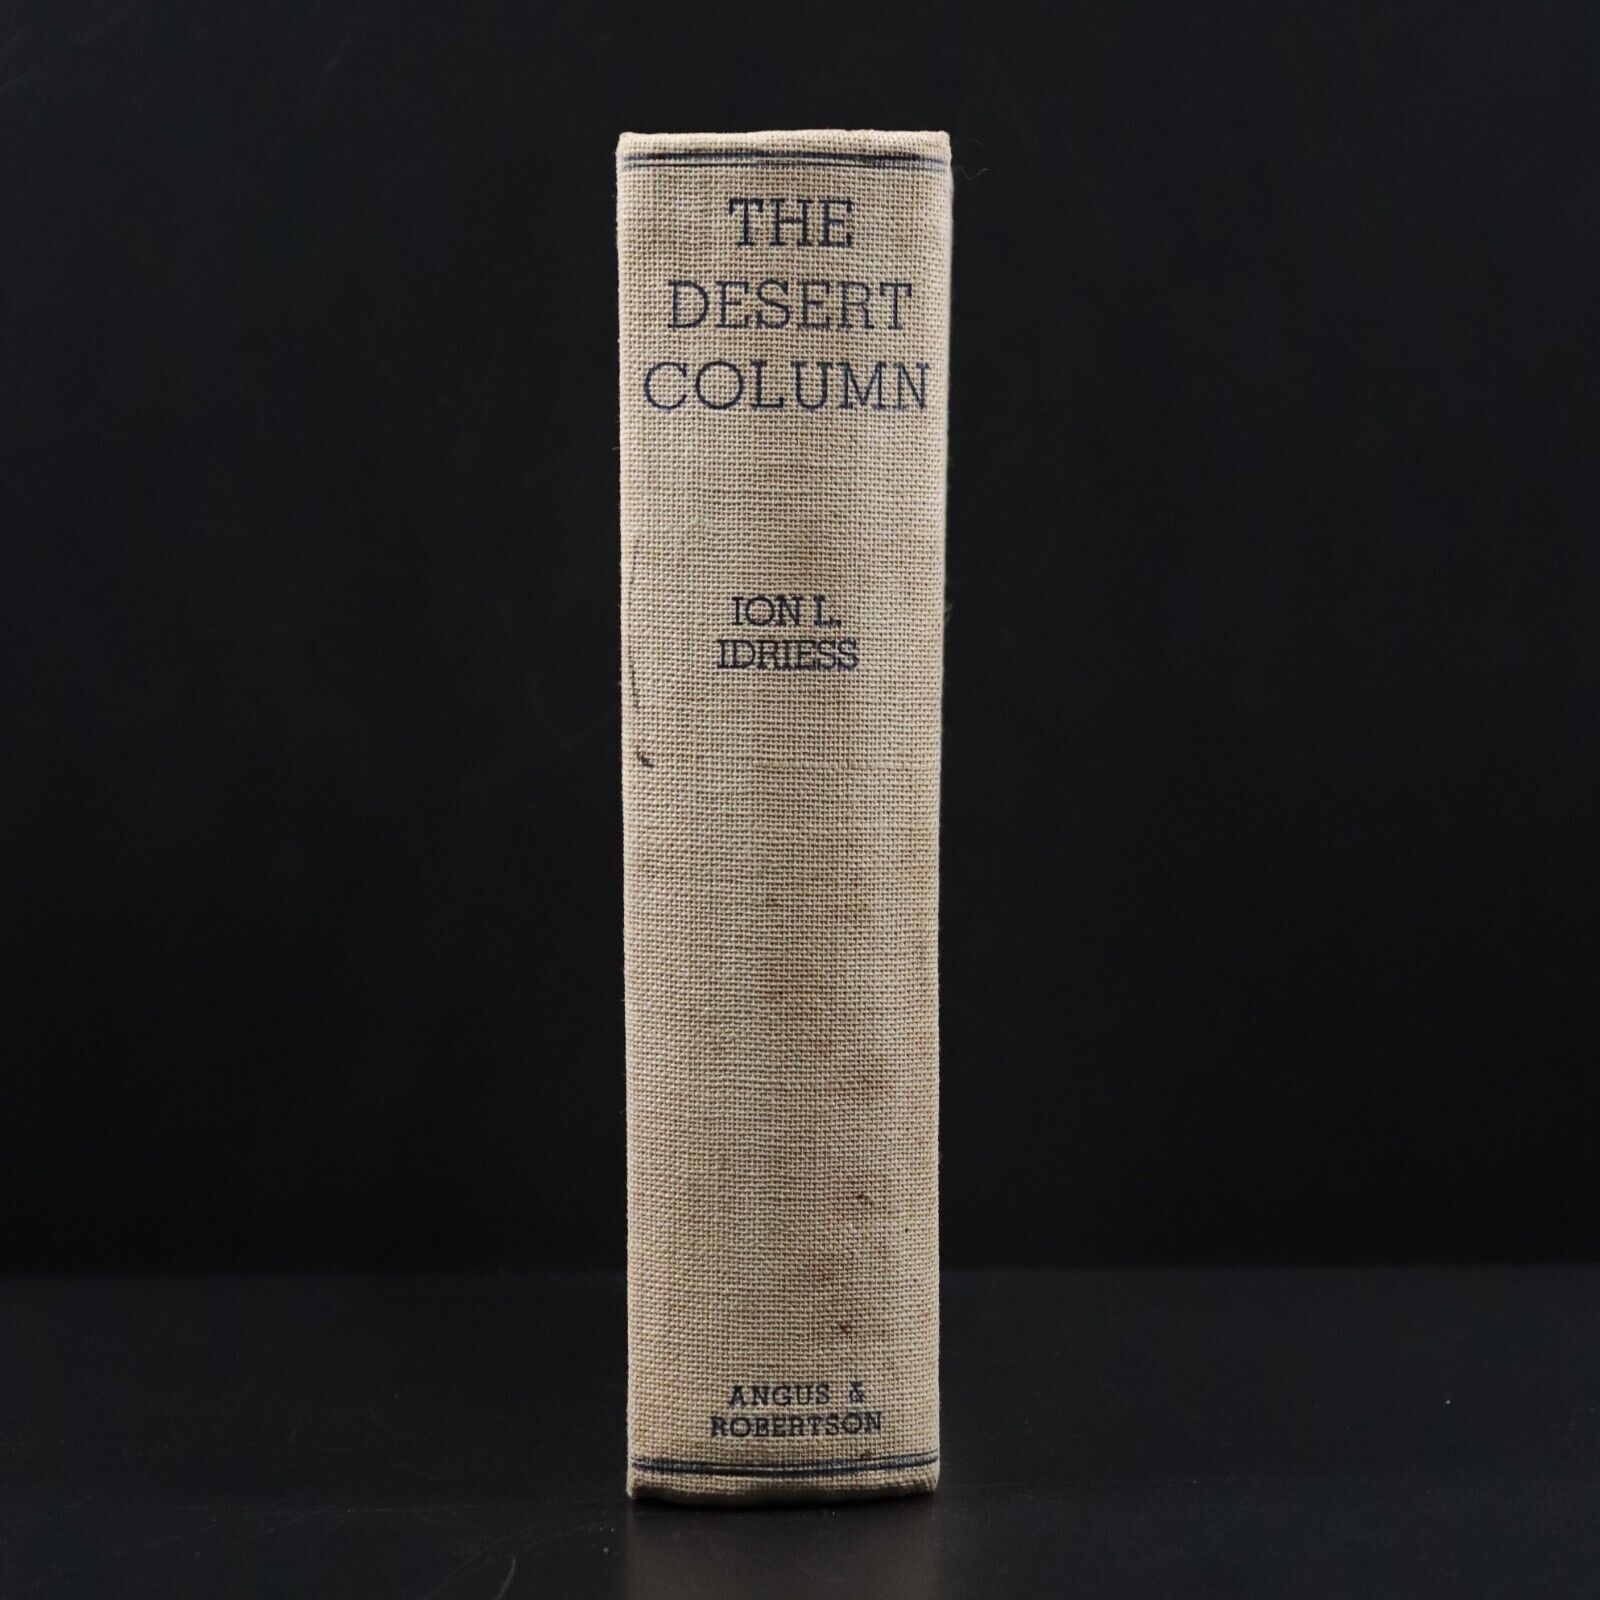 1936 The Desert Column by Ion L. Idriess Antique WW1 Anzac Military Book